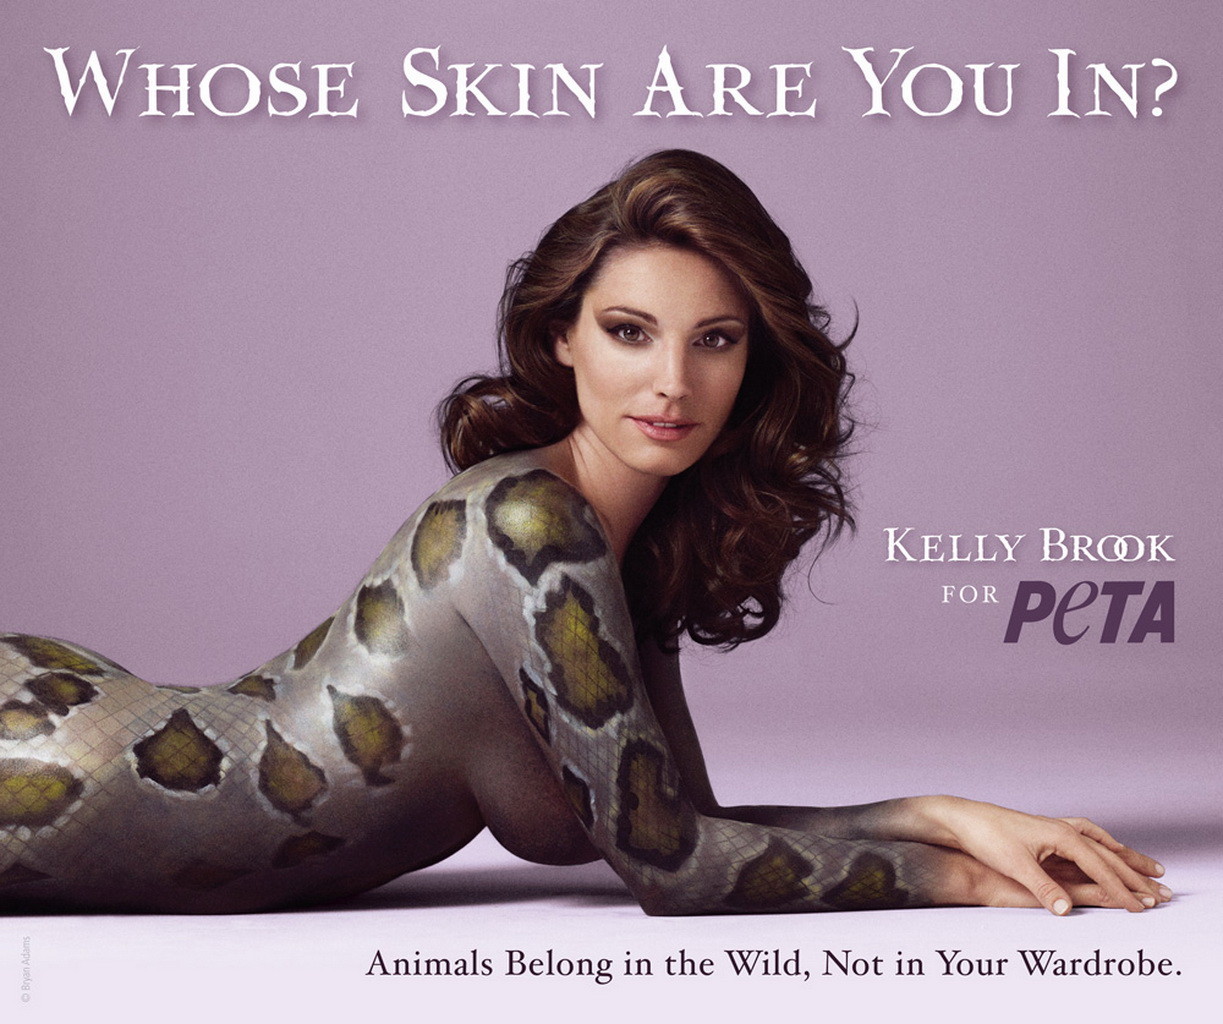 Kelly Brook corpo nudo dipinto per nuova campagna pubblicitaria peta
 #75288204